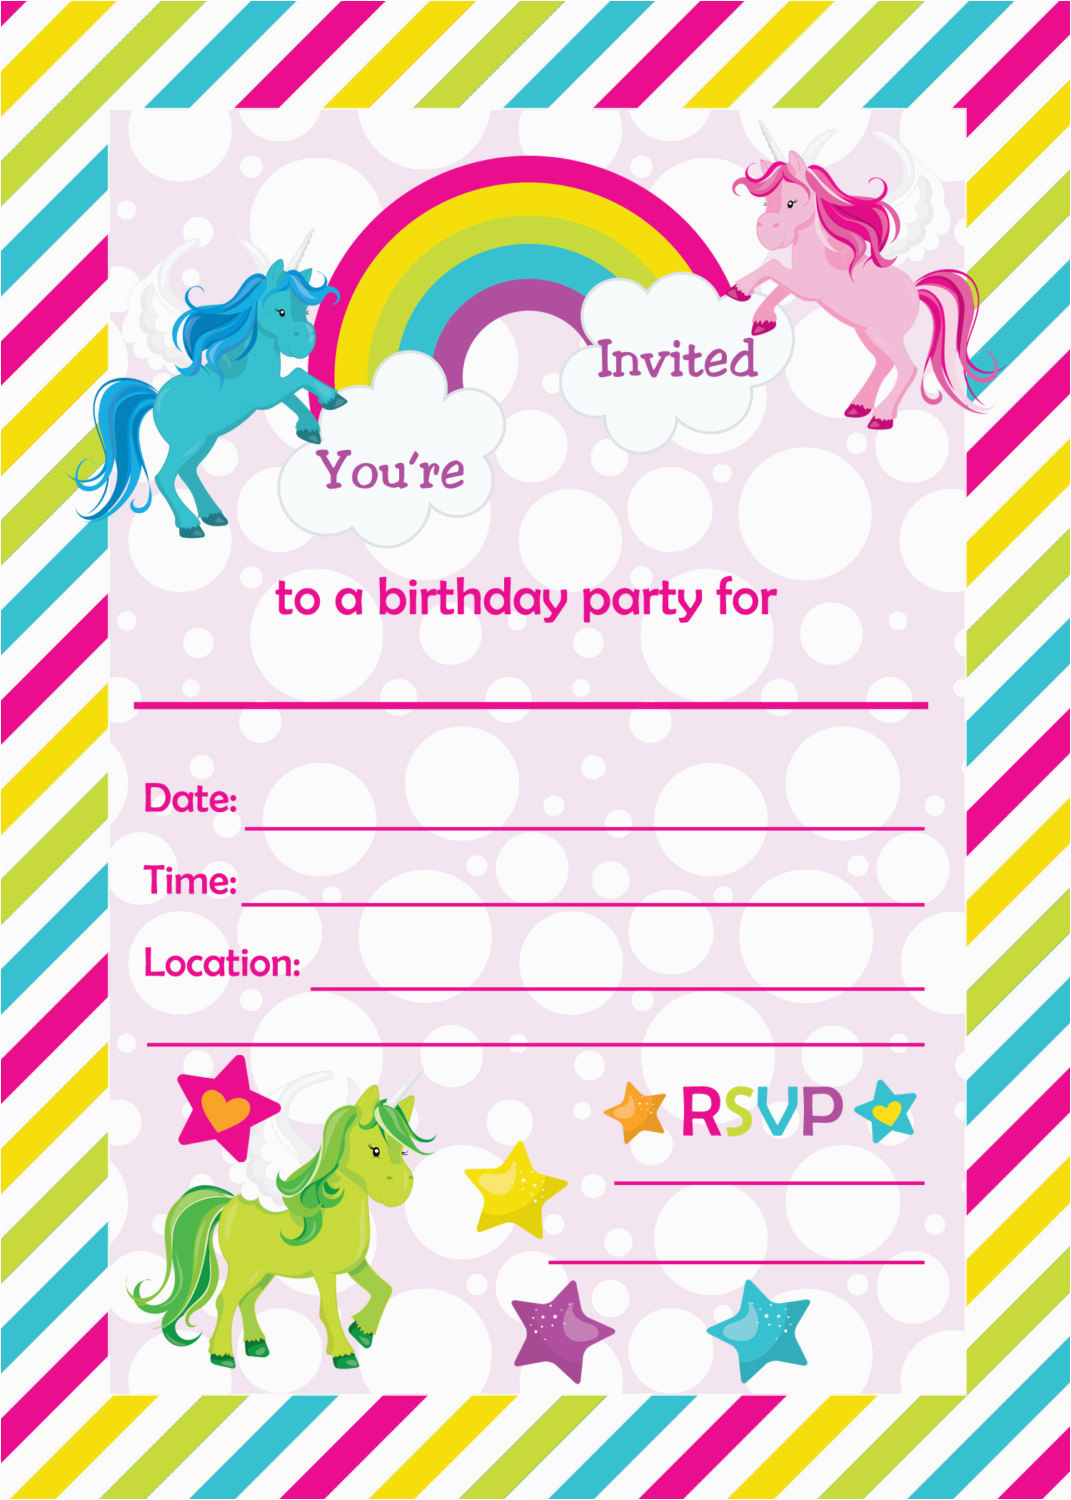 fill in birthday party invitations